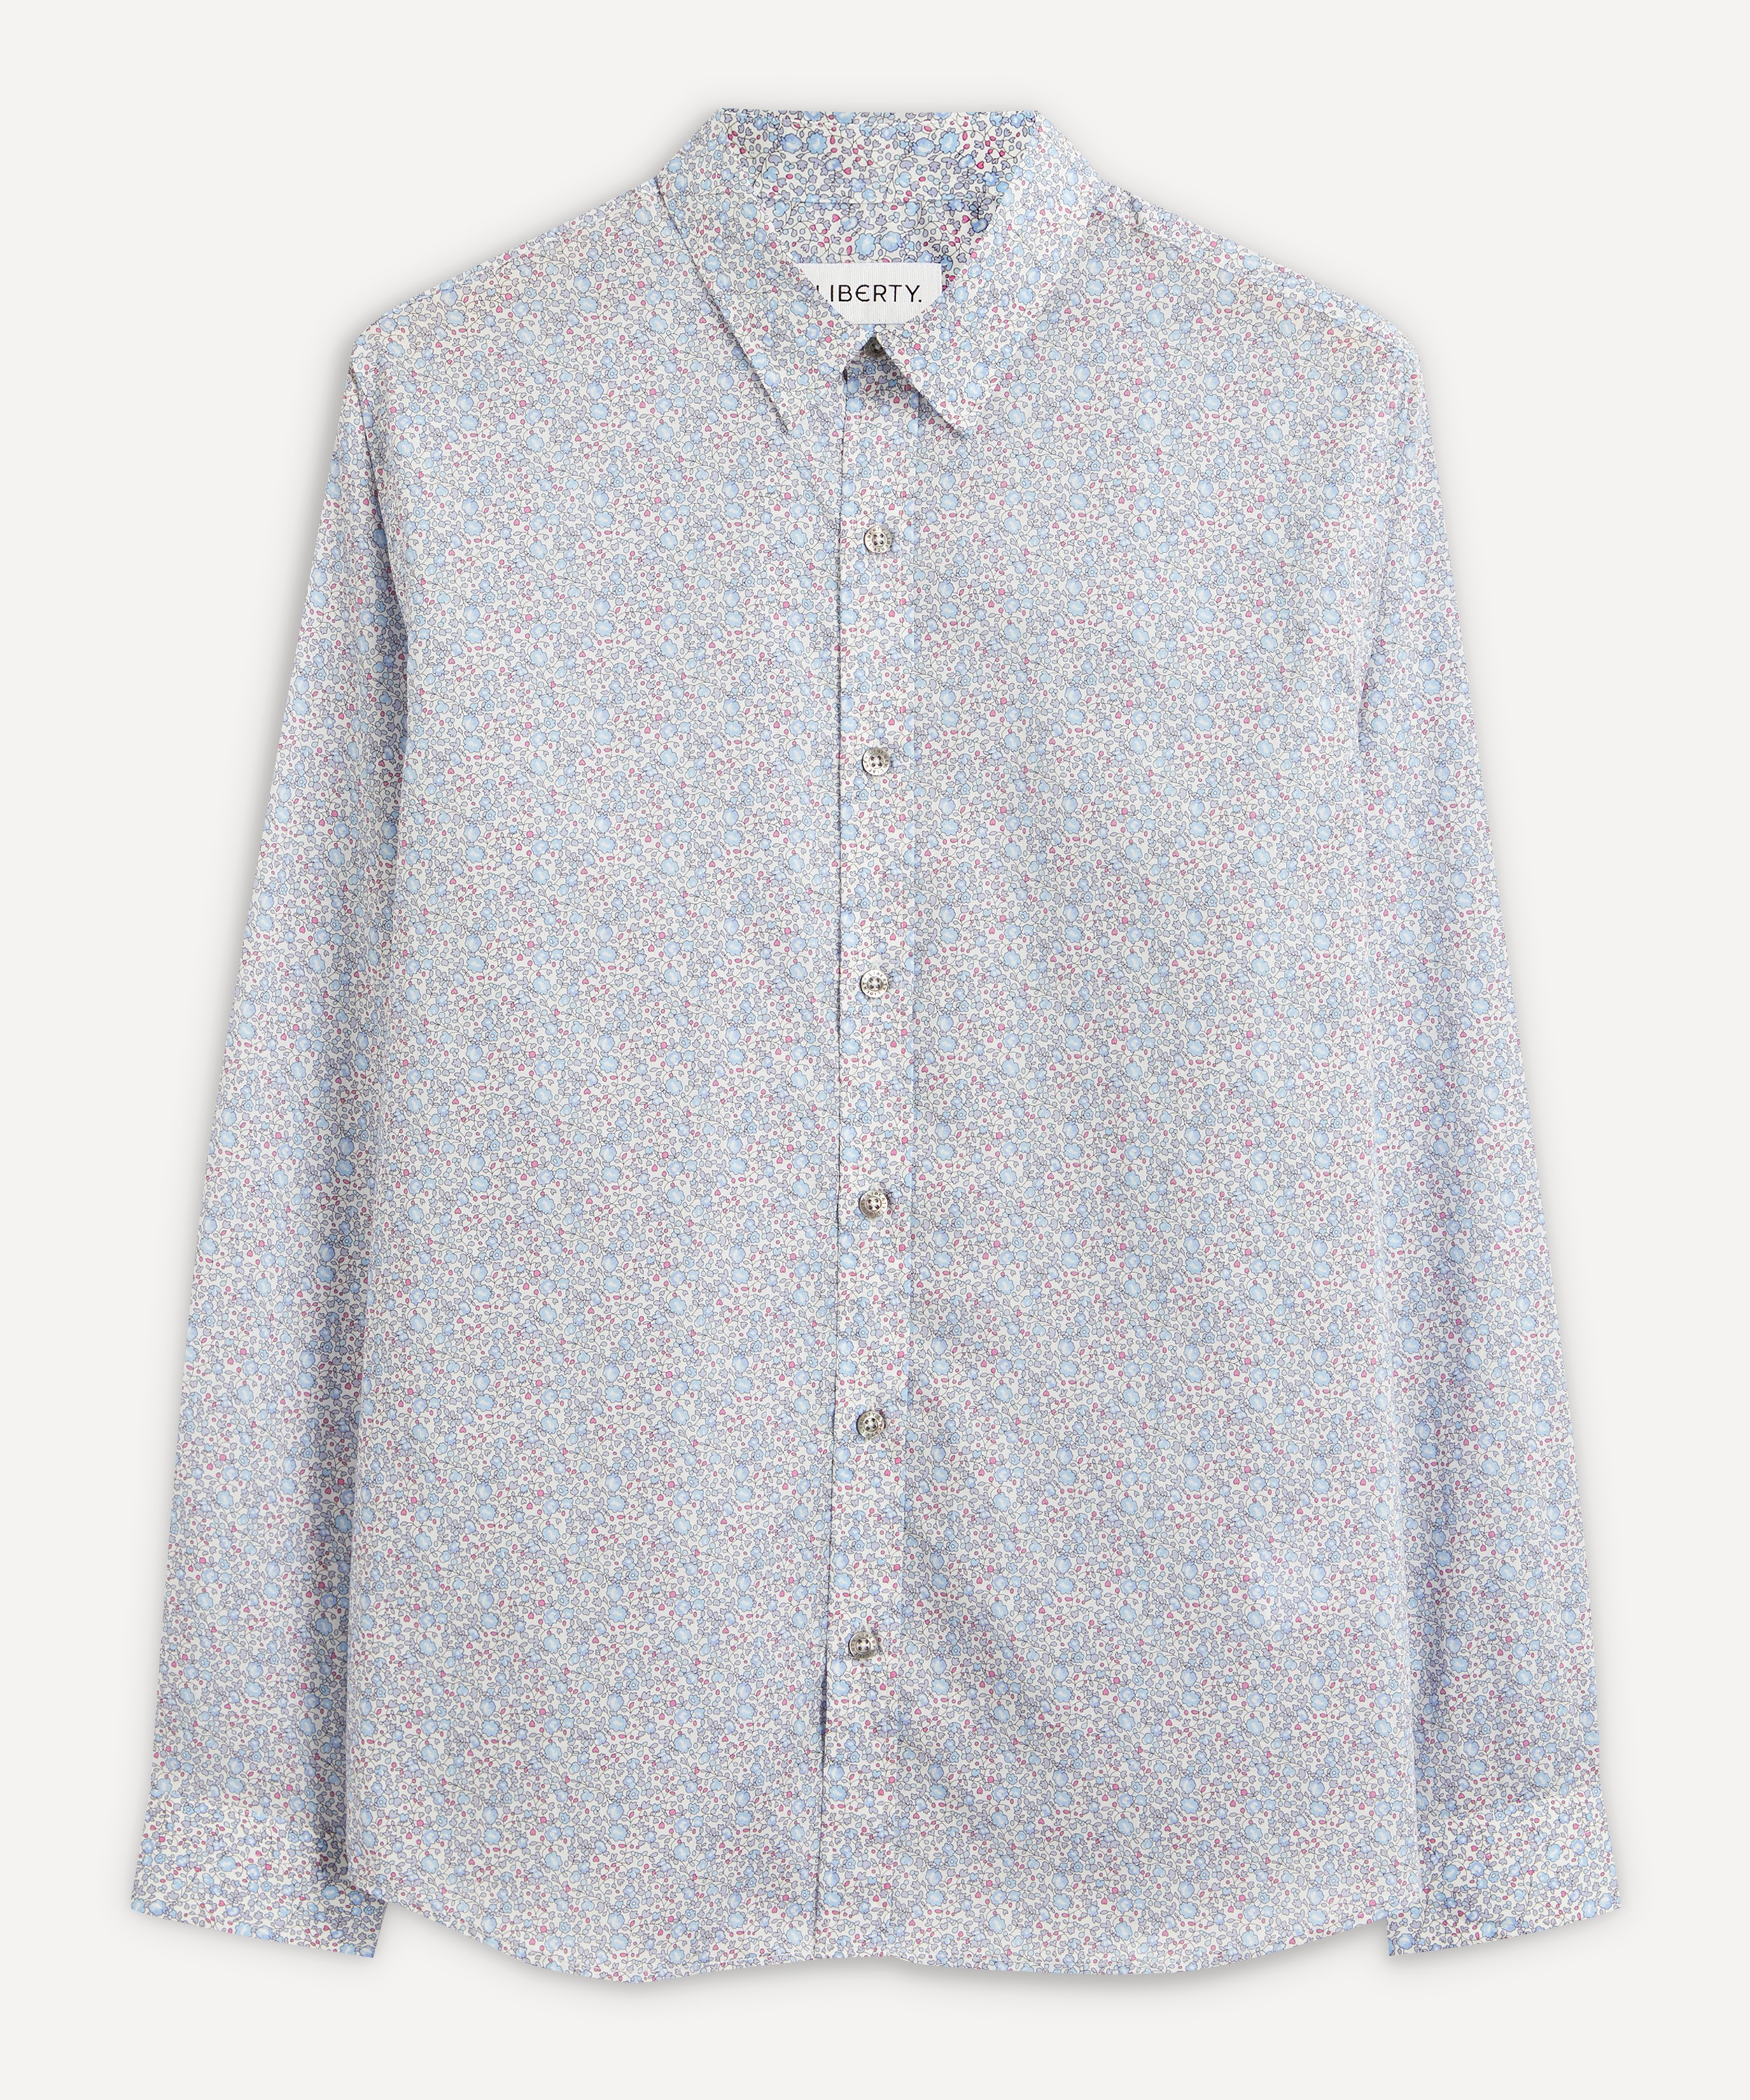 Liberty - Eloise Tana Lawn™ Cotton Casual Classic Shirt